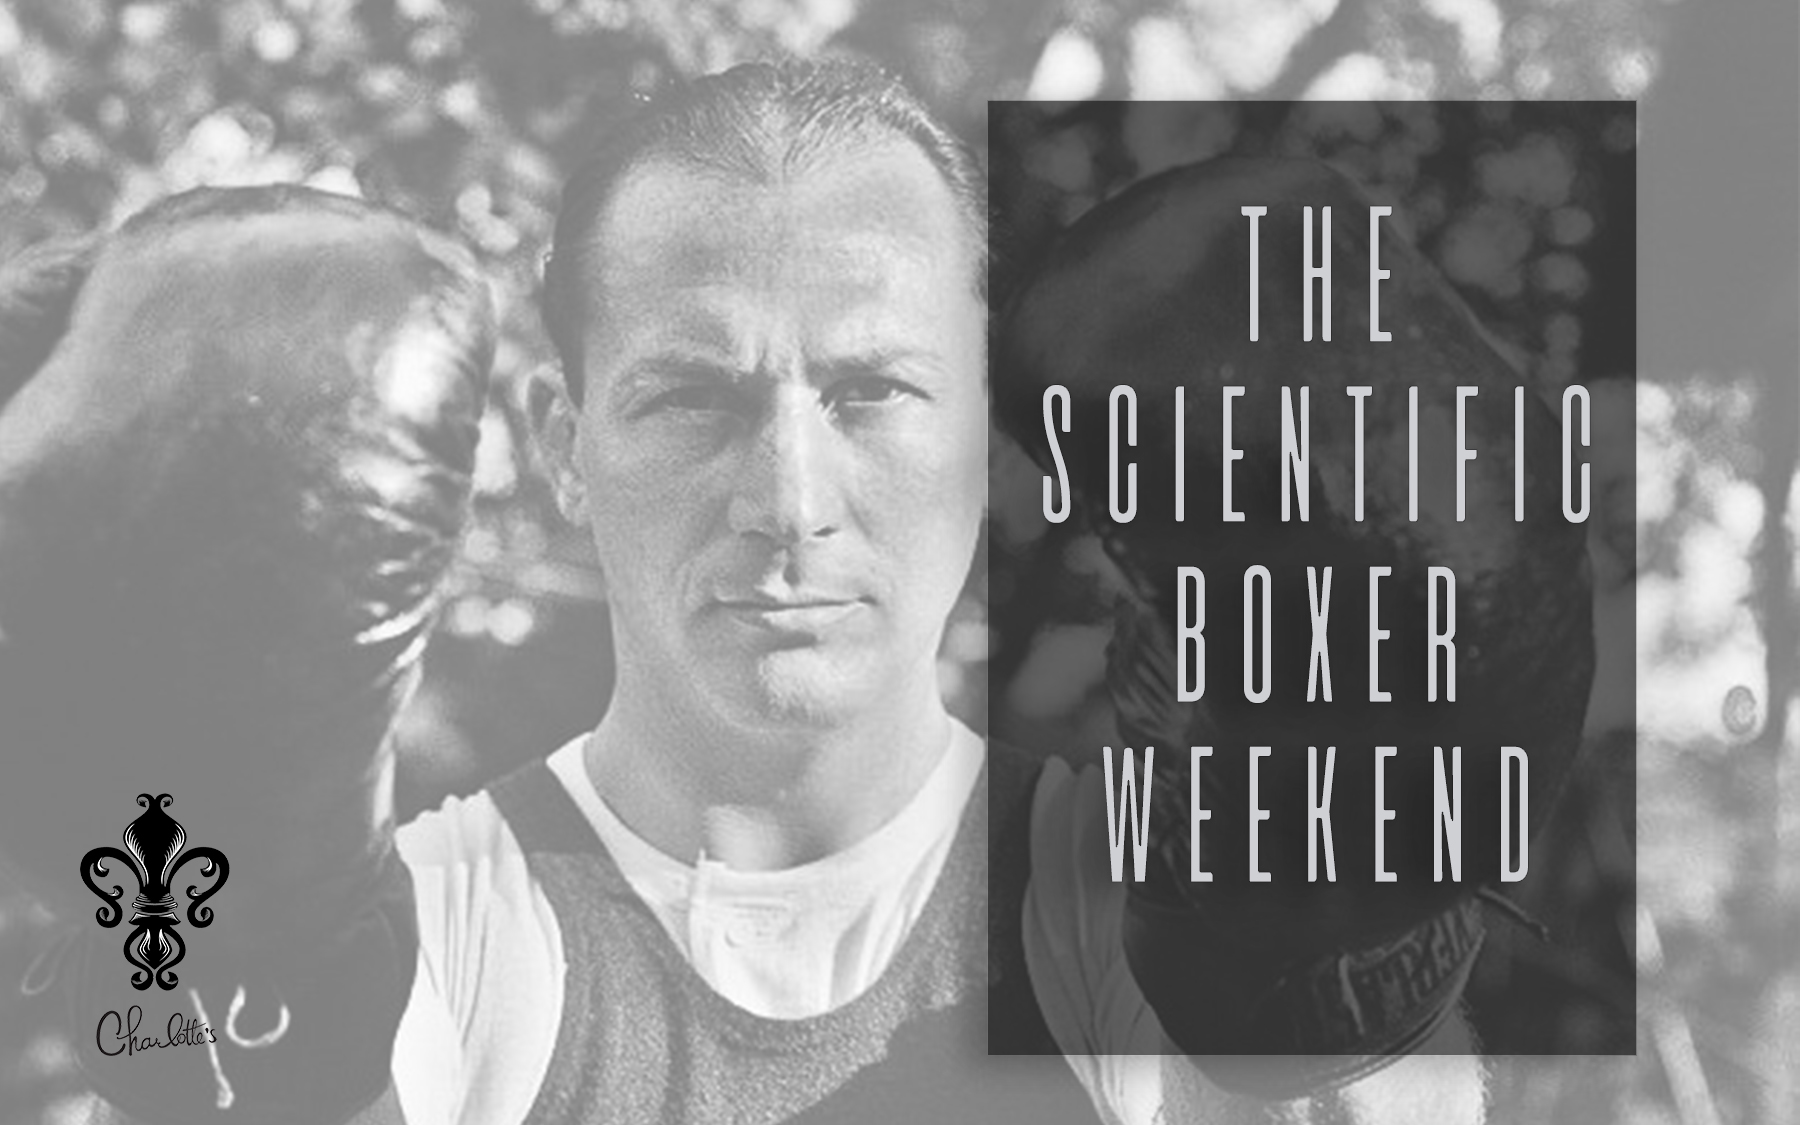 The Scientific Boxer Weekend